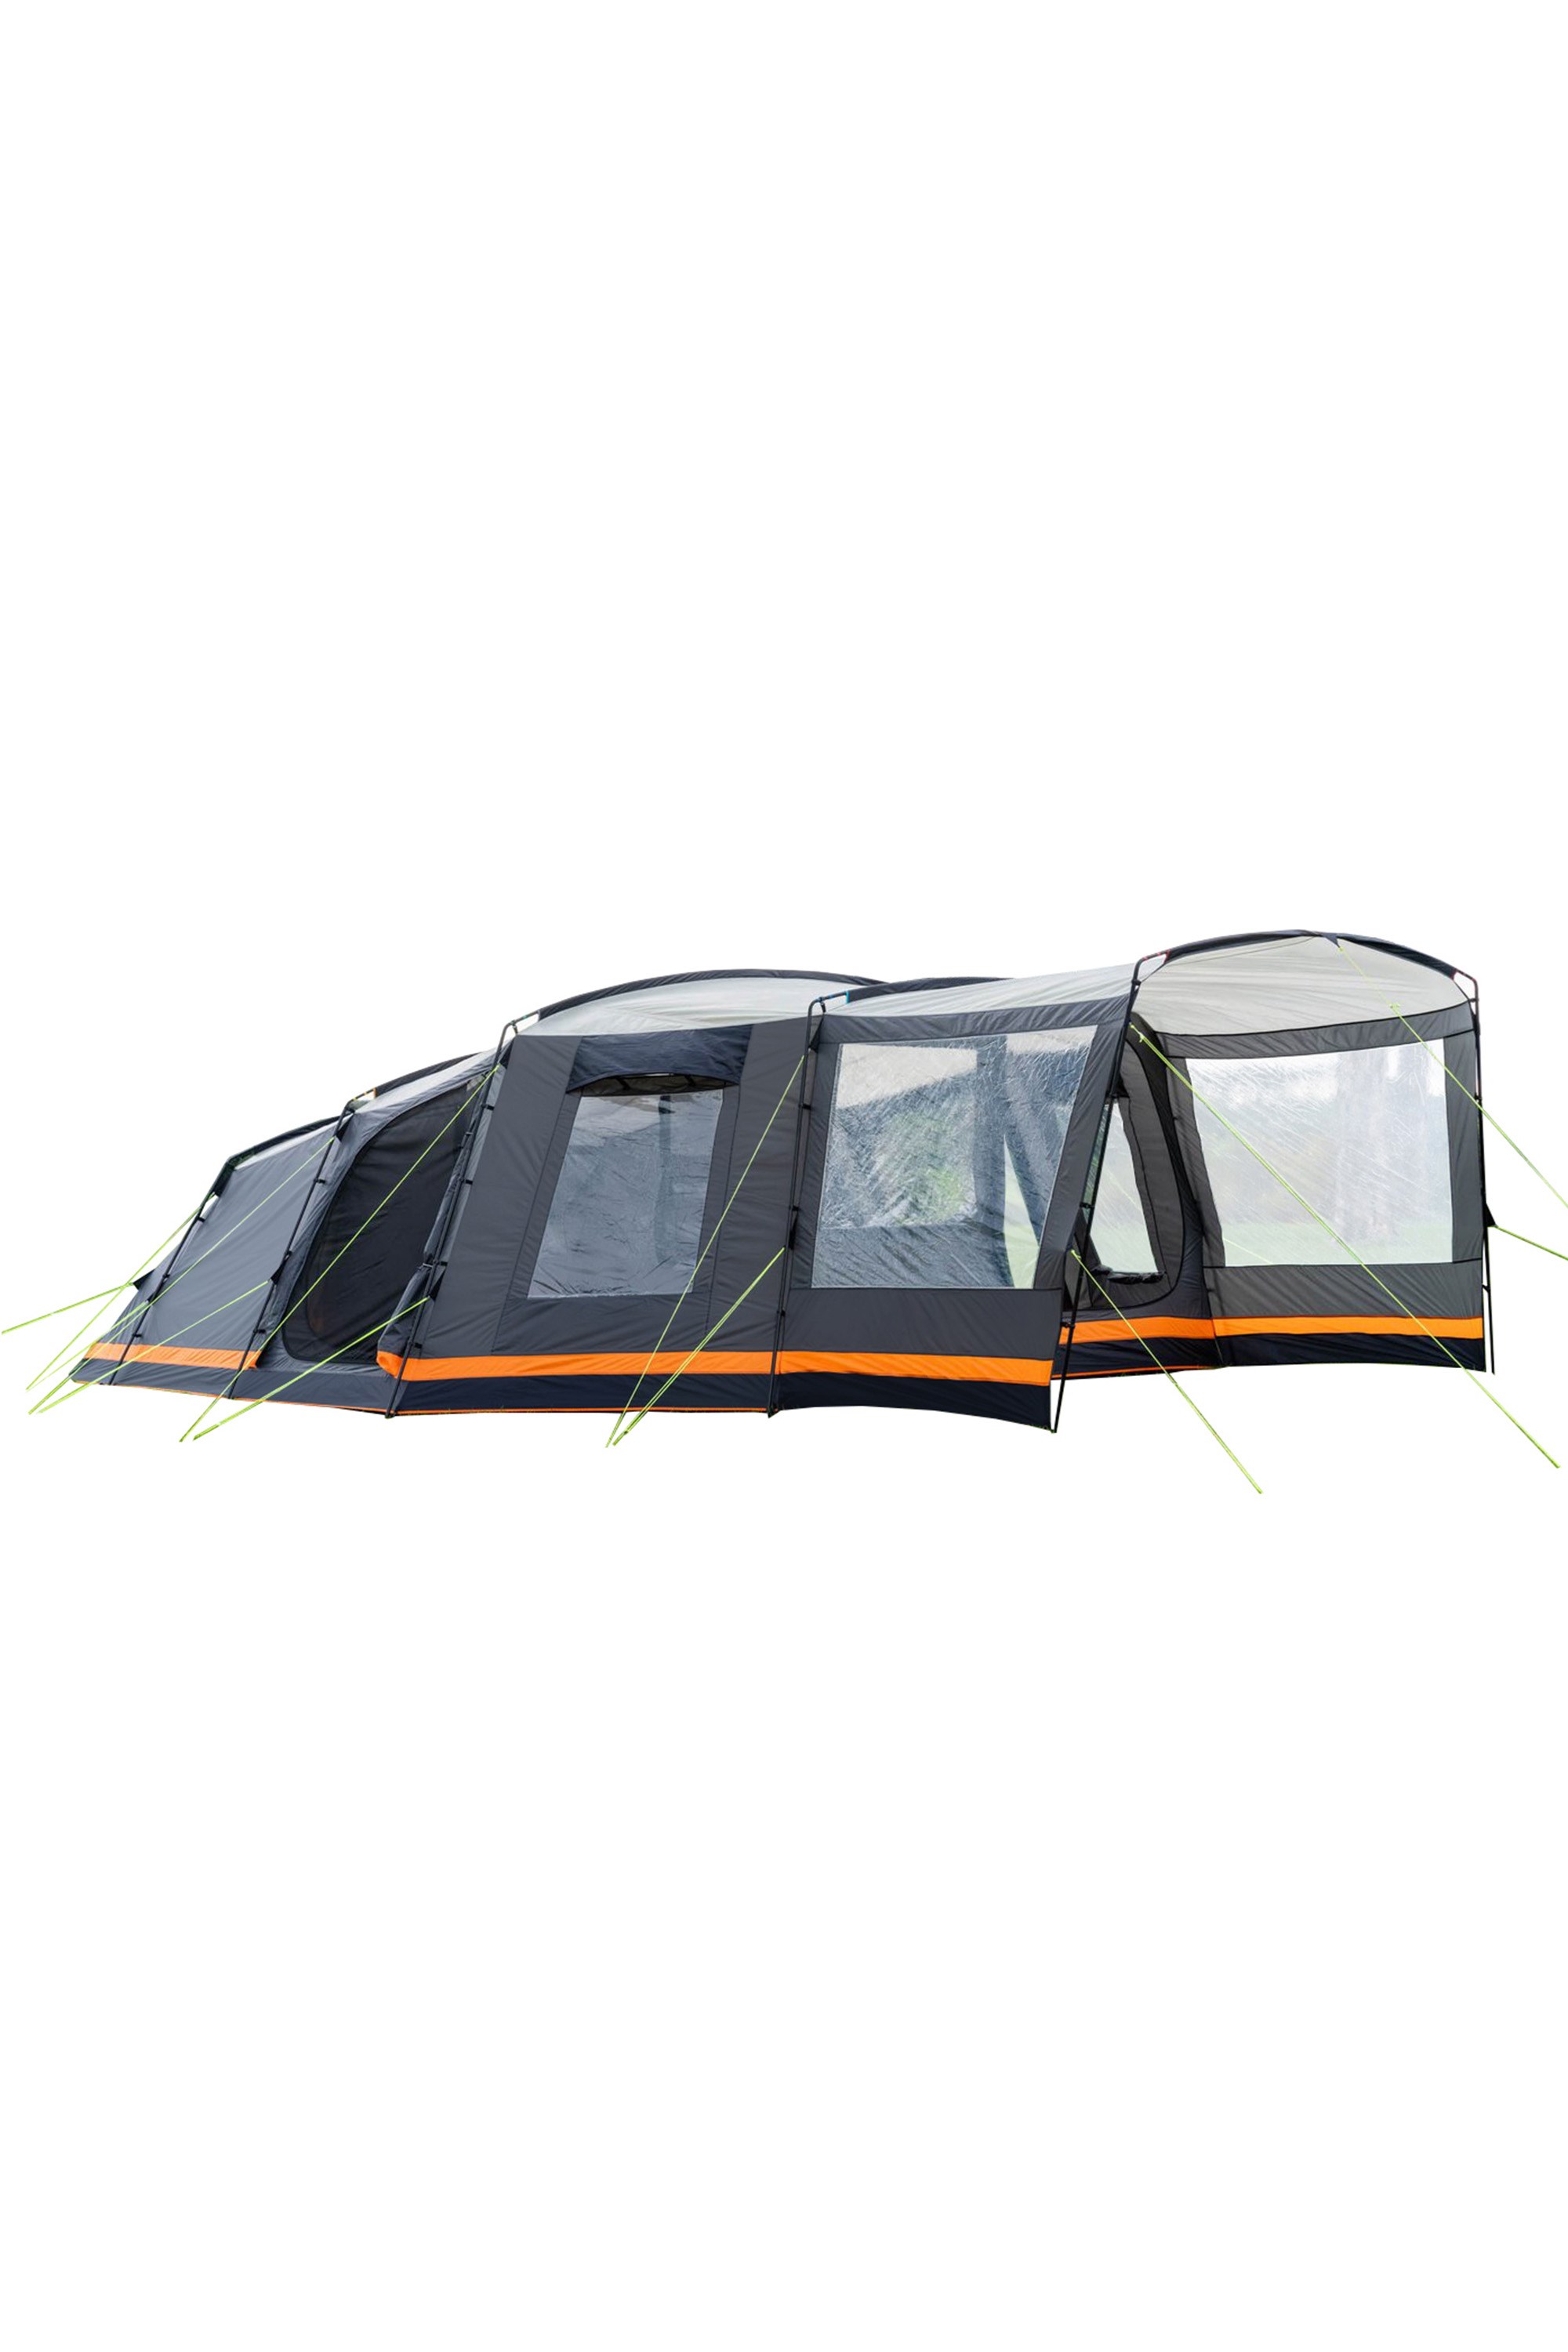 Endeavour 7 Berth Tent -